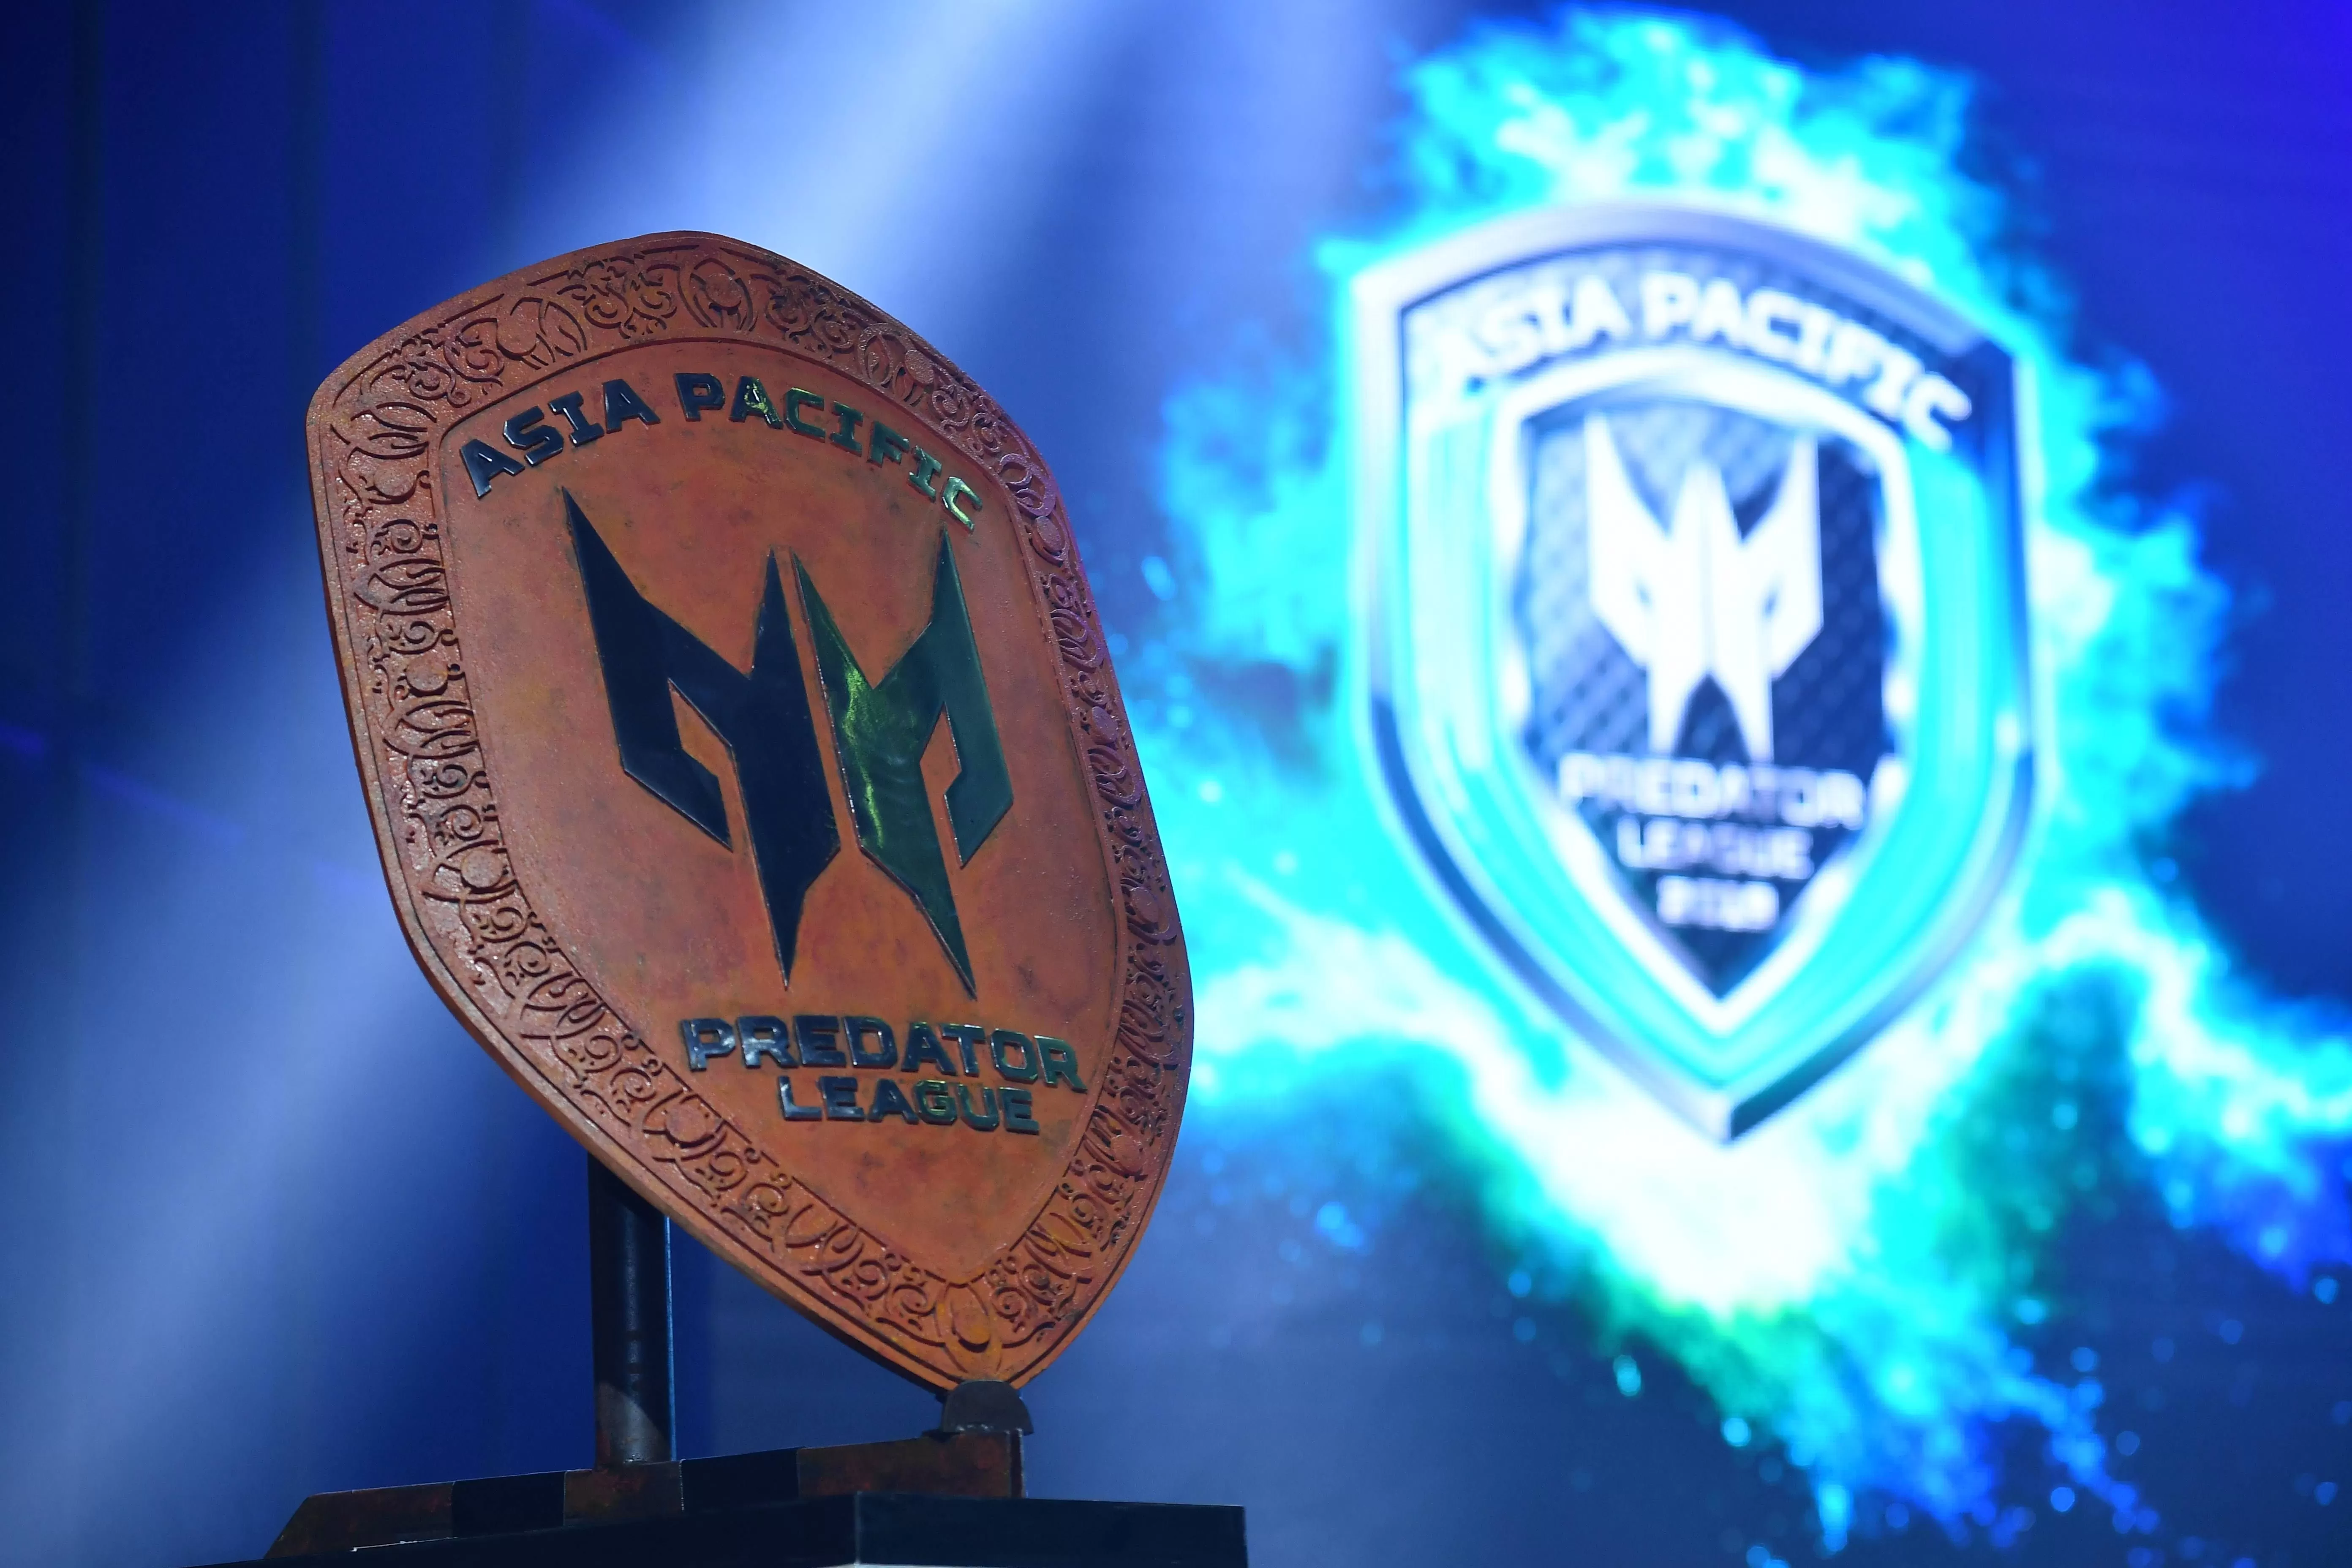 ARR 6831 | predator | 26 ทีมอีสปอร์ต DOTA2 และ PUBG ตบเท้าเข้าแข่งขันรอบแกรนด์ไฟนอล Asia Pacific Predator League 2019